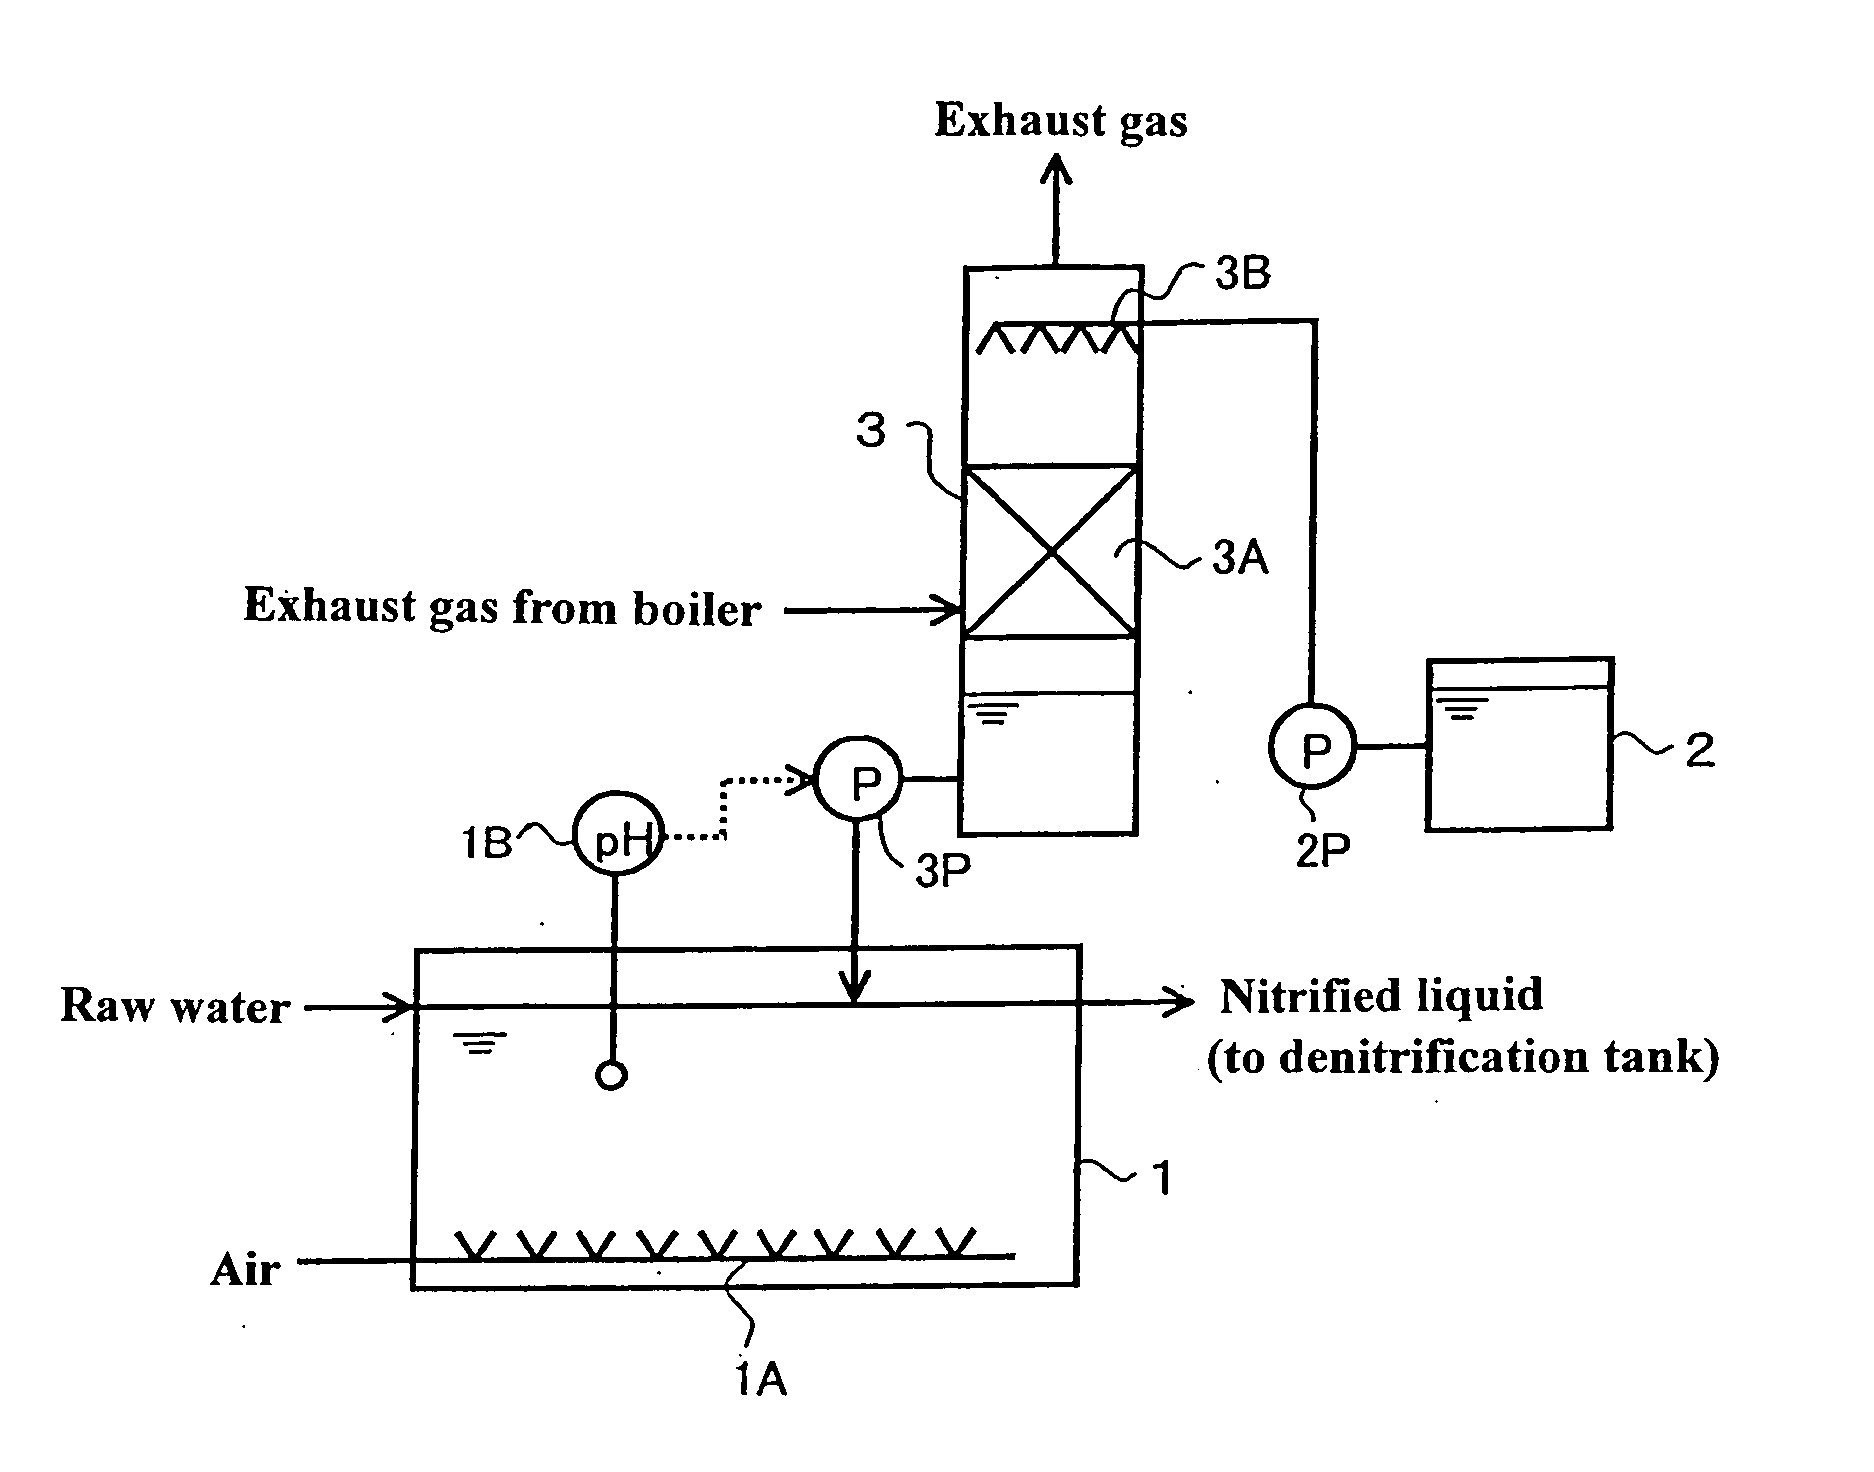 Method for treating water containing ammonium-nitrogen